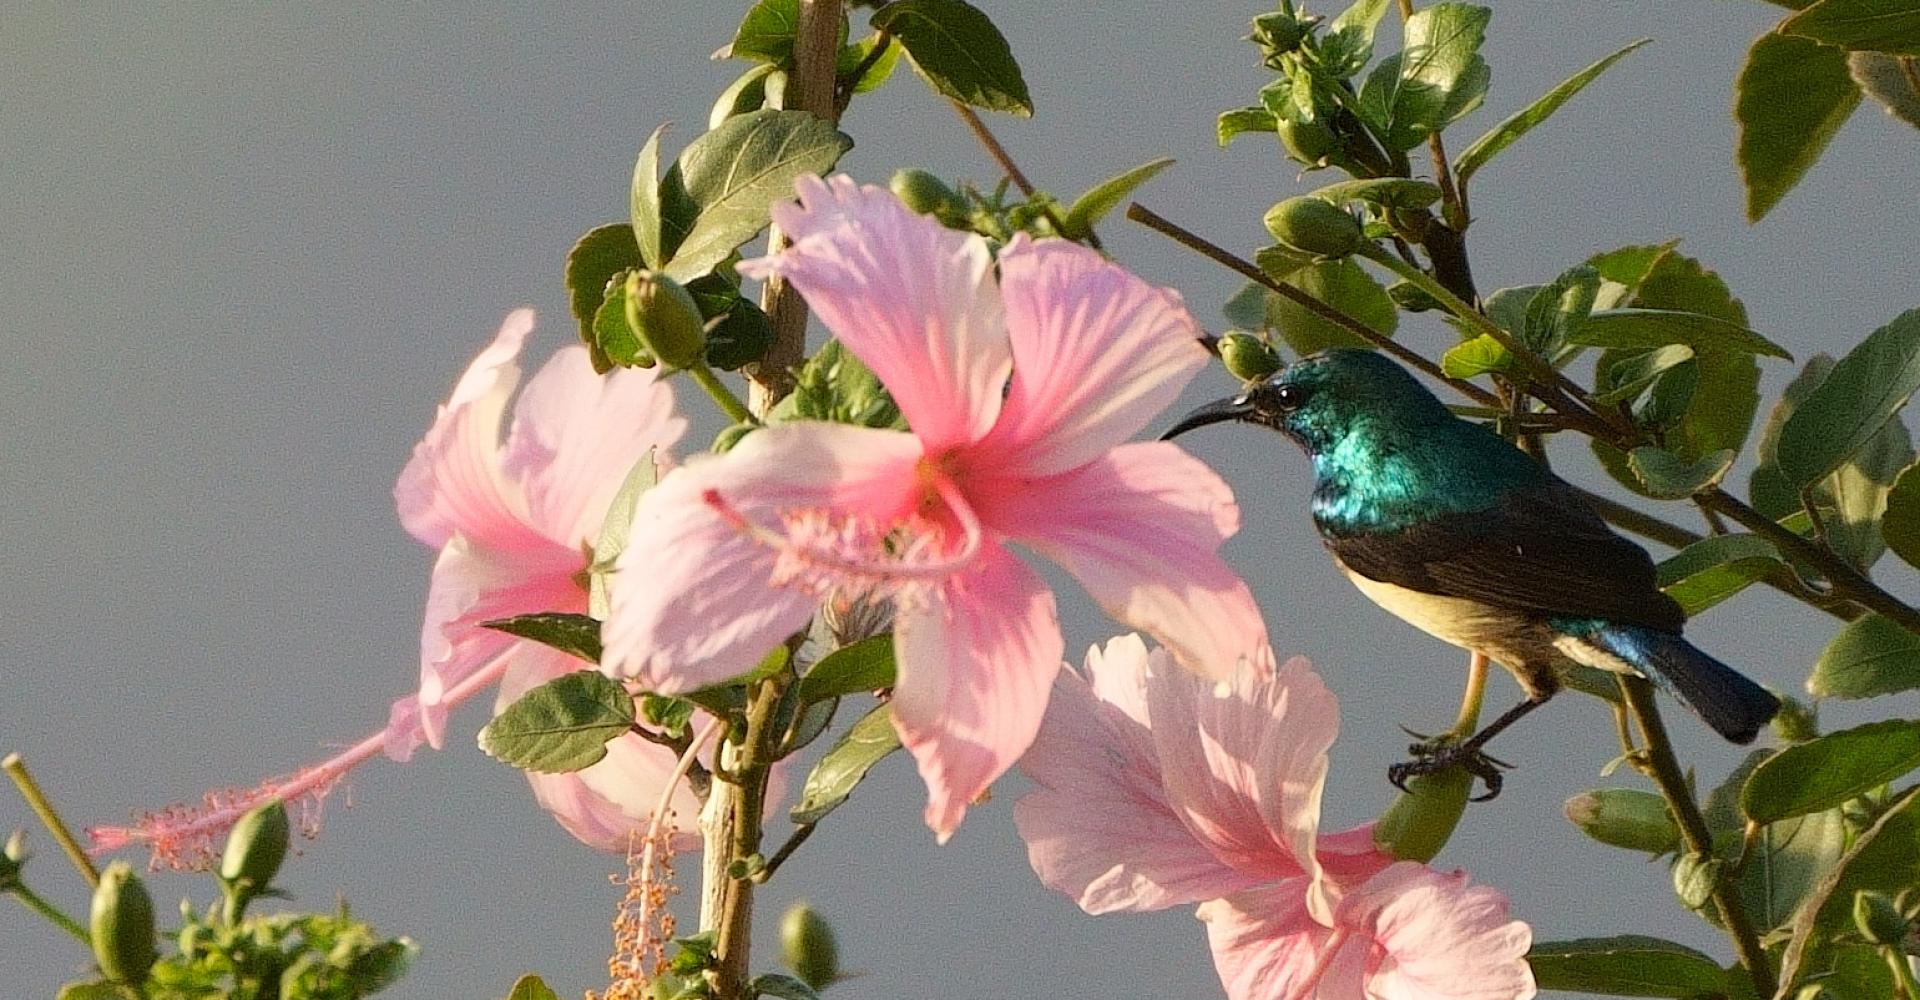 Small emerald bird close to big light pink flower